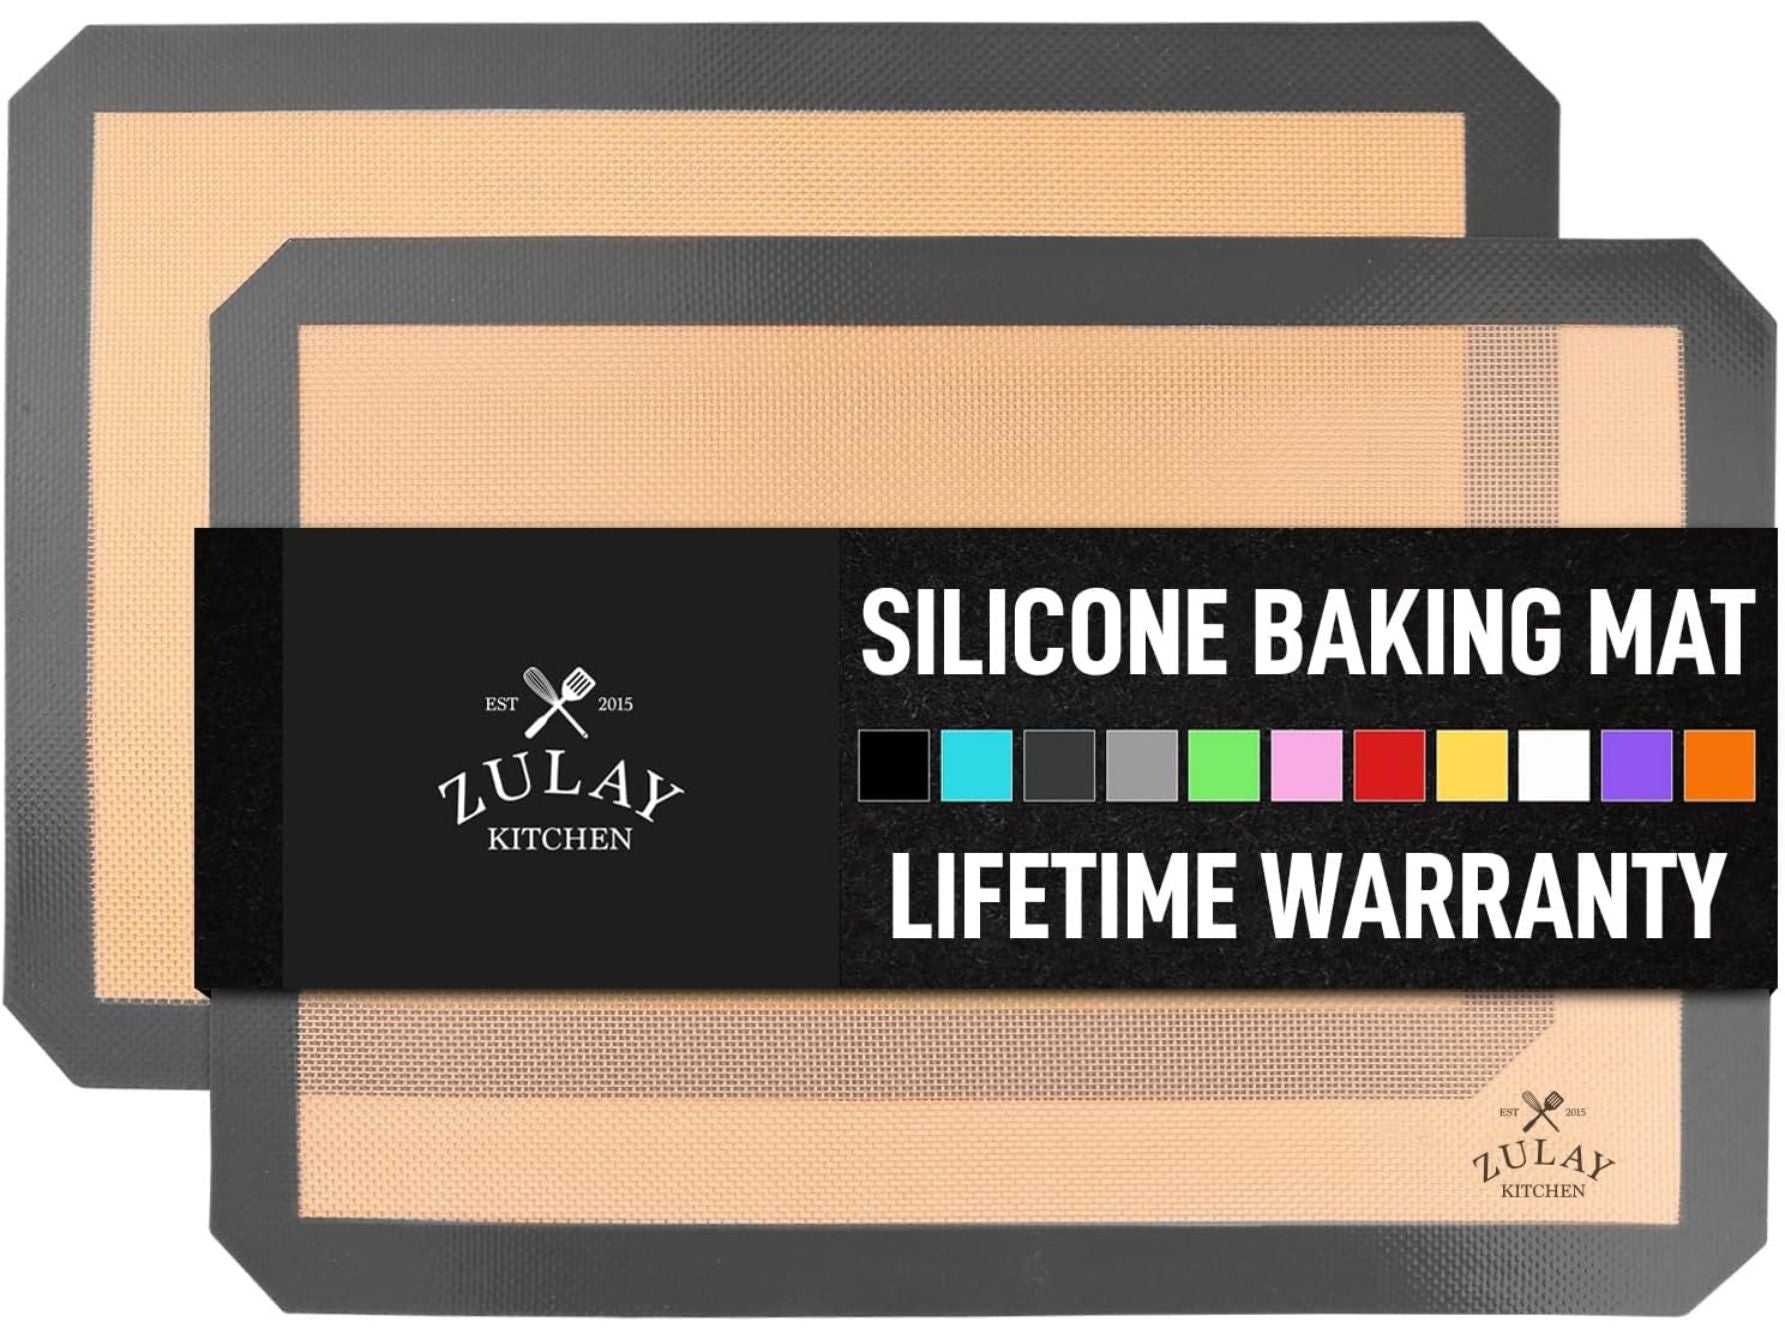 Half Sheet Silicone Macaron Mat – Busy Bakers Supplies